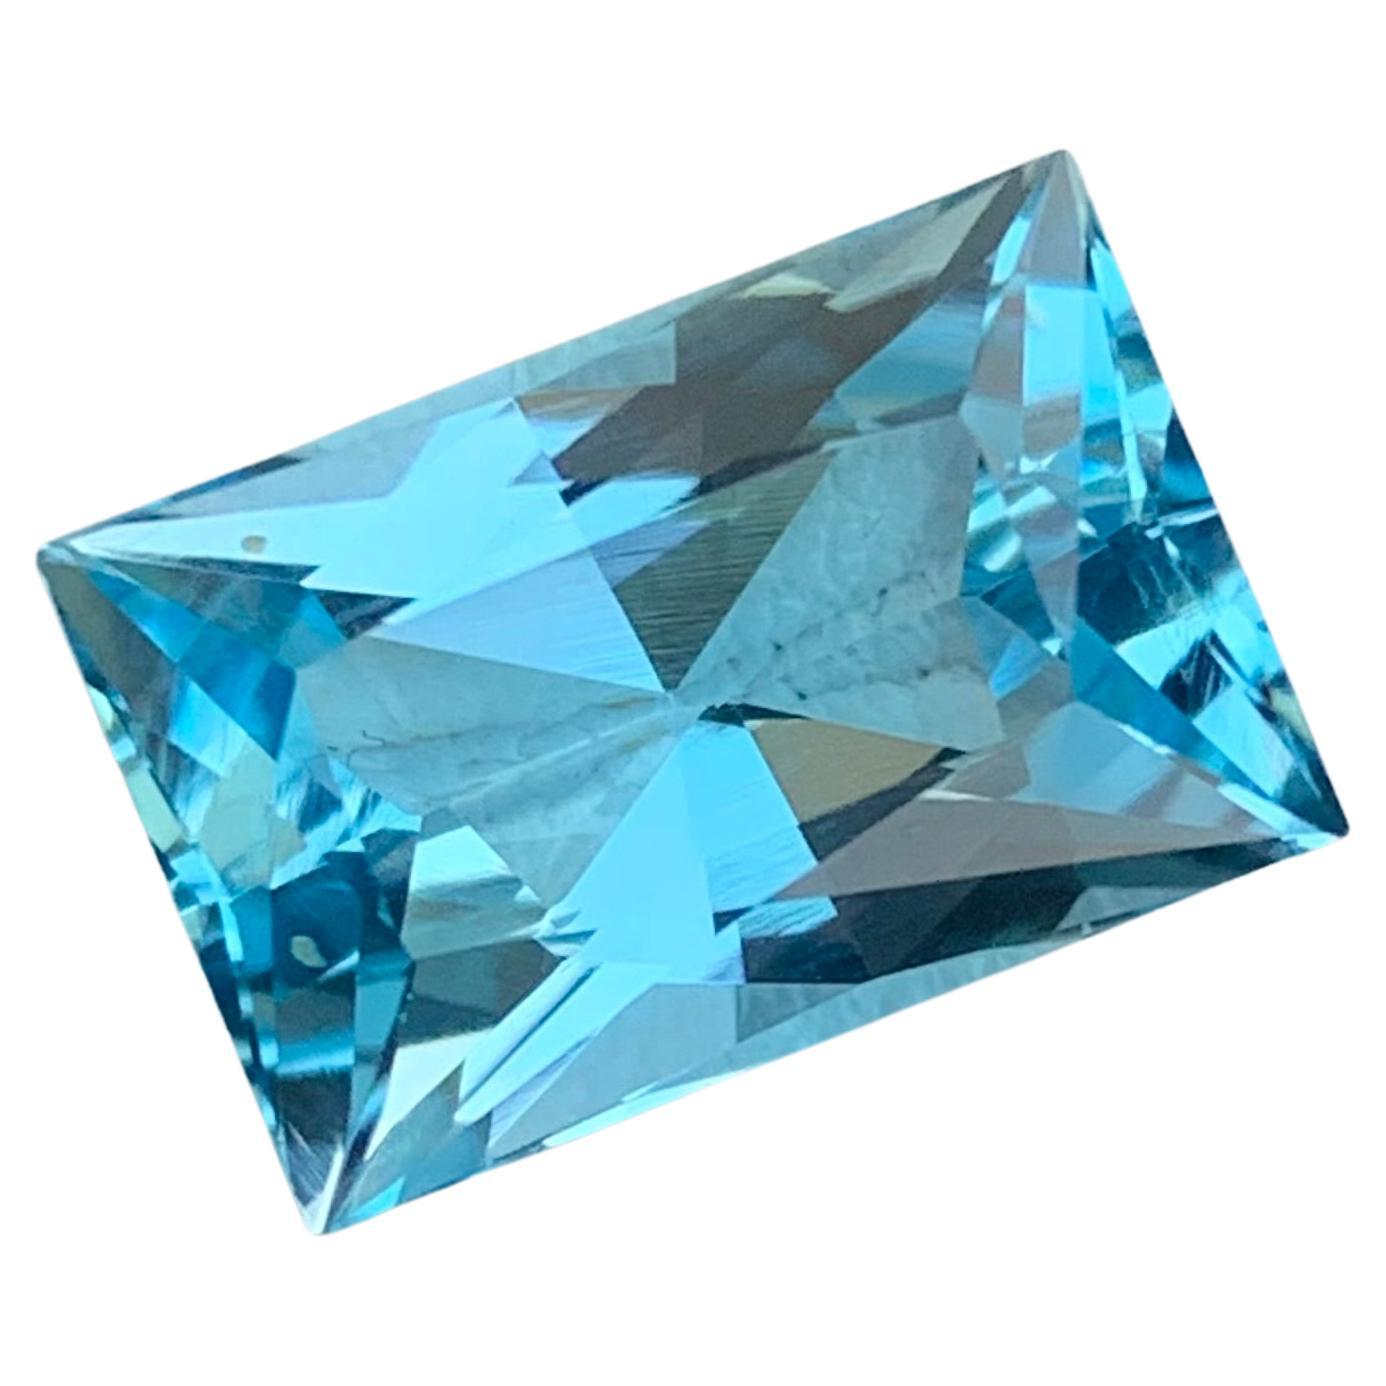 Beautiful 8.50 Carat Faceted Sky Blue Topaz Gemstone From Brazil Baguette Shape